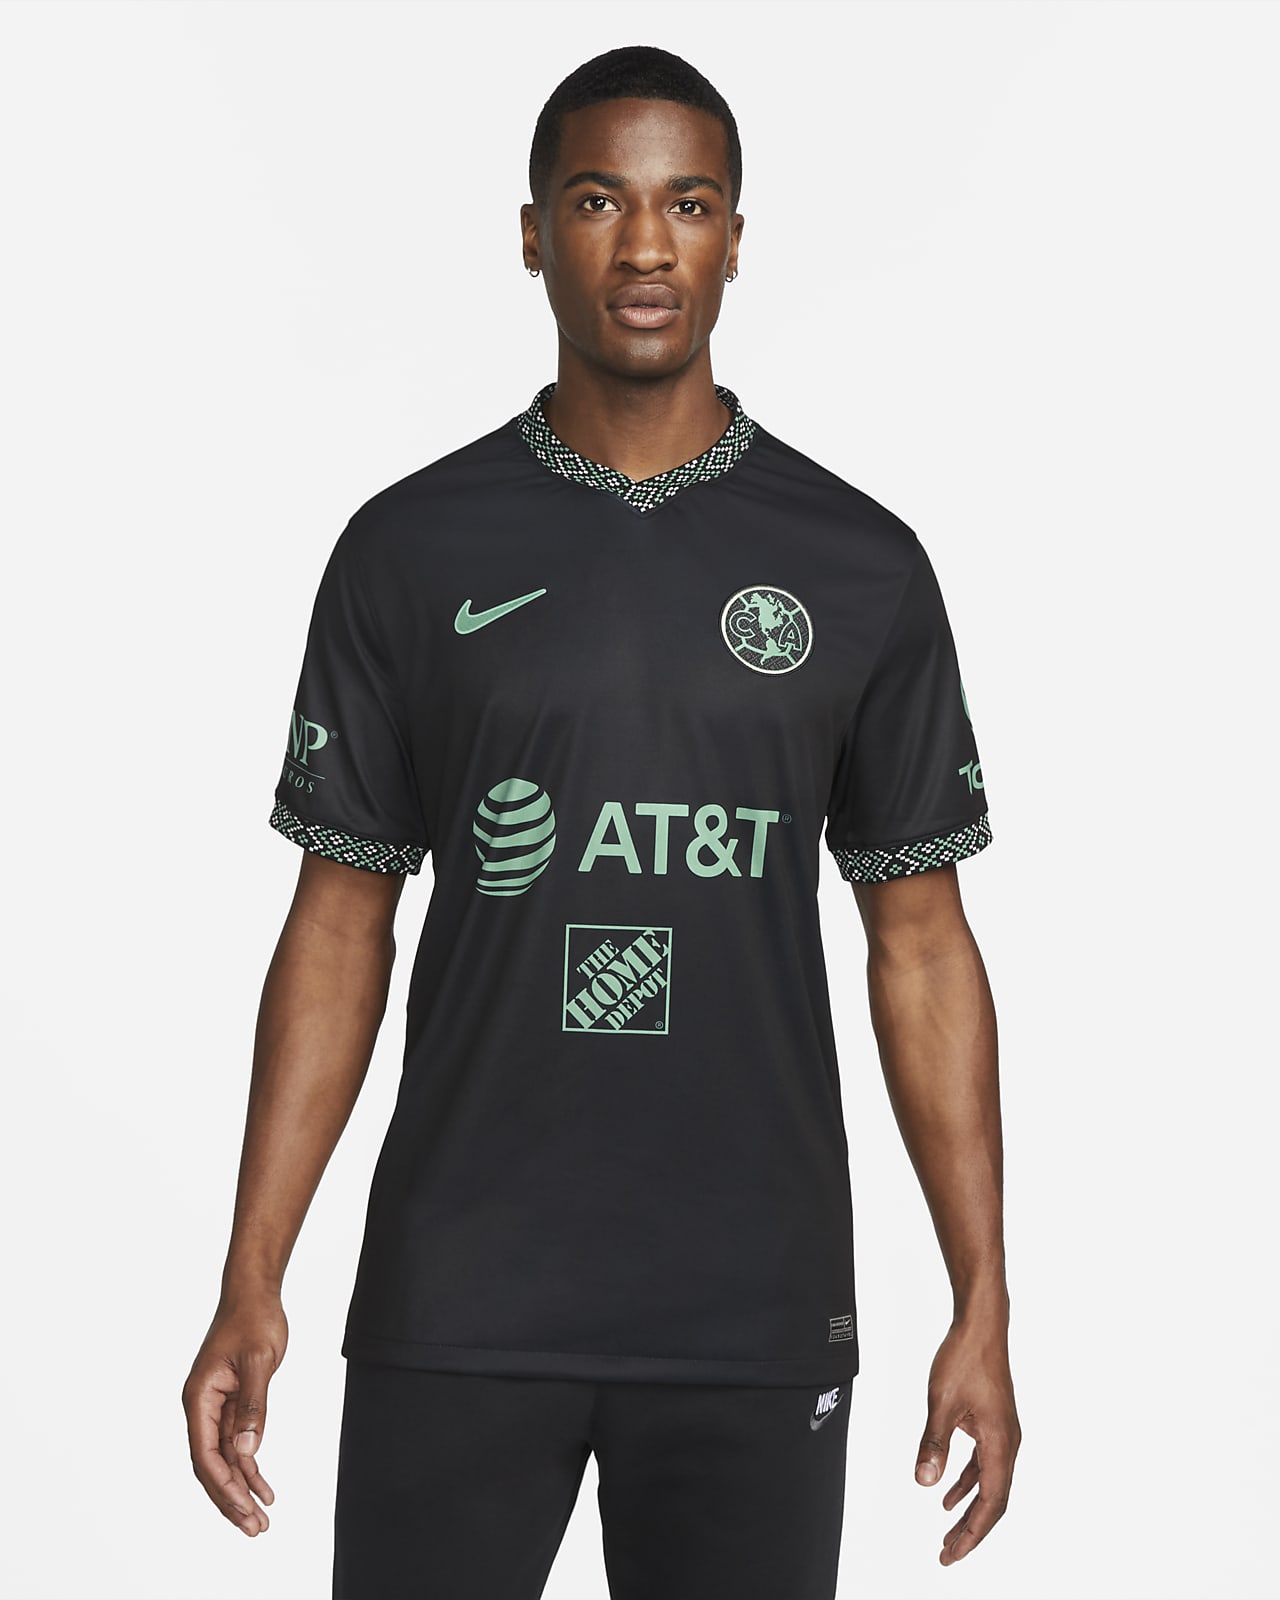 Jersey de fútbol Nike Dri-FIT para hombre Club América alternativa 2021/22 Stadium 